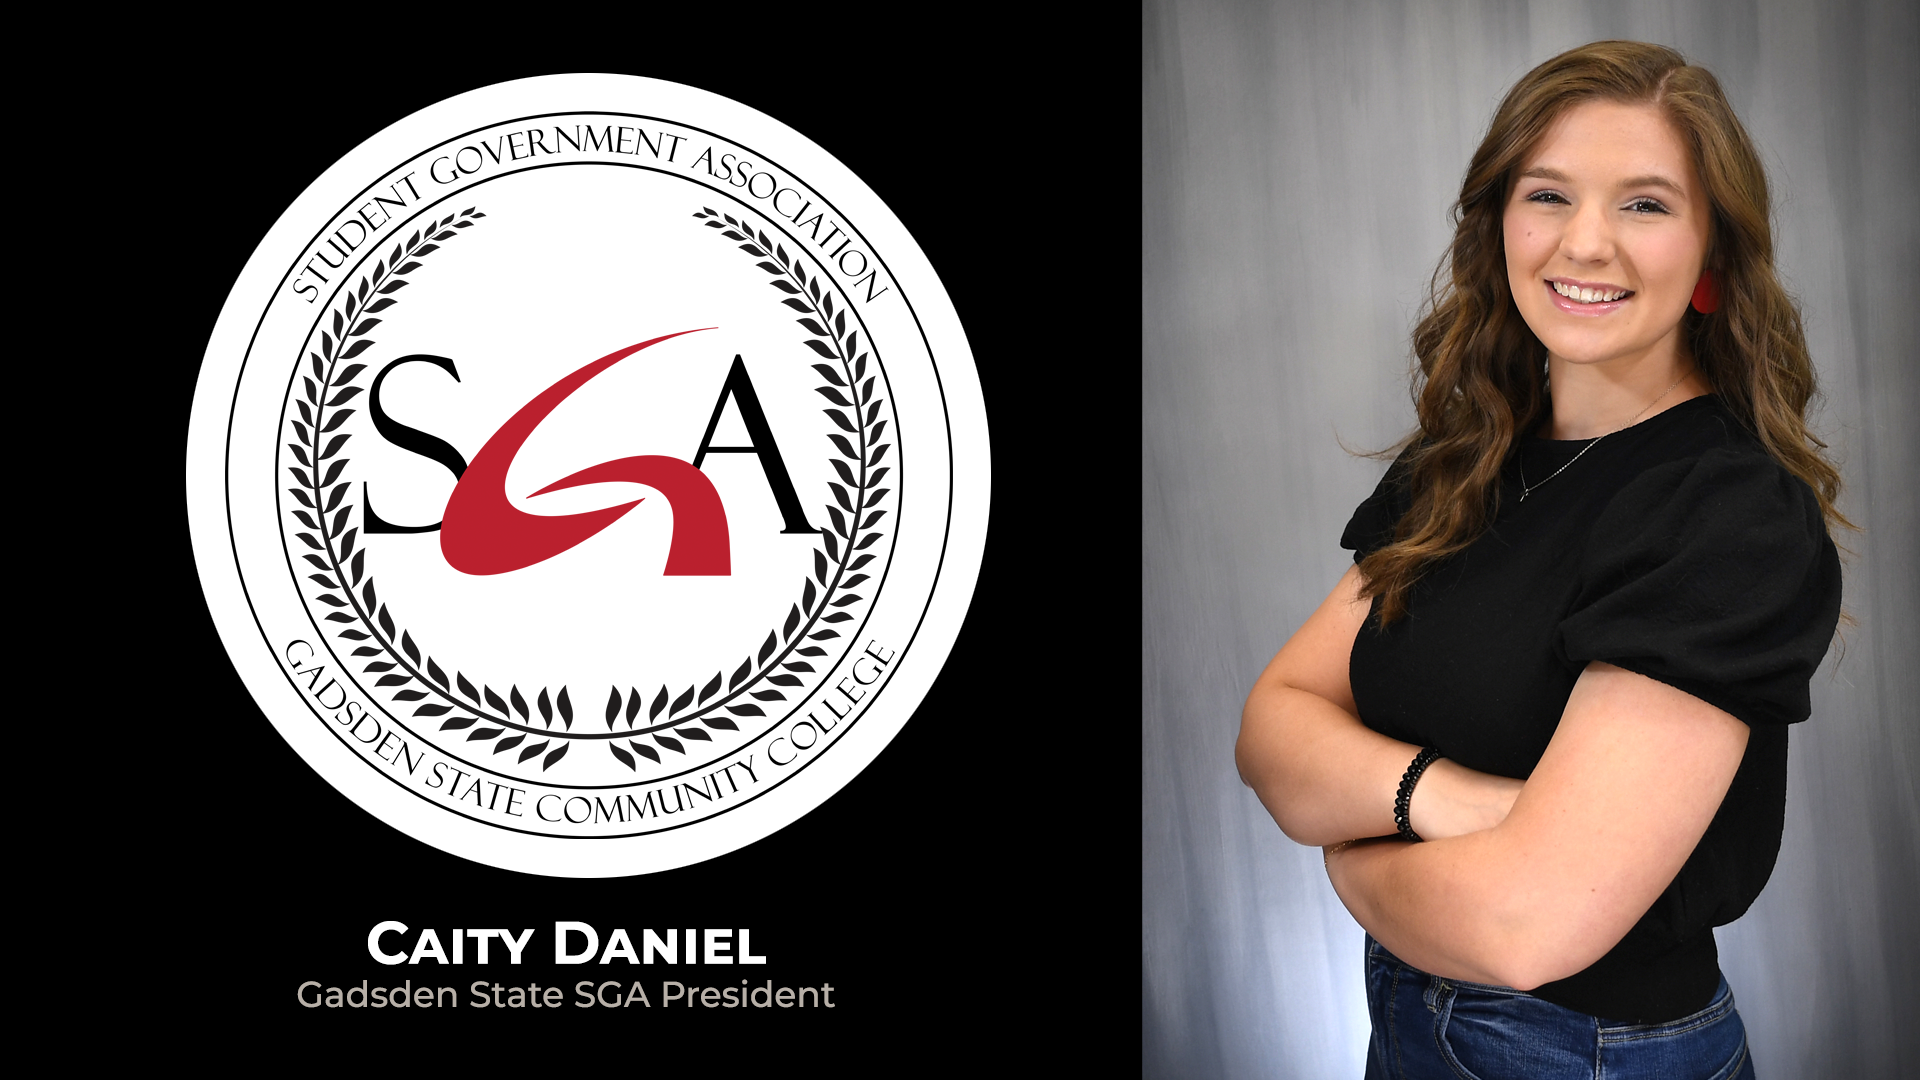 SGA logo and headshot of Caity Daniel